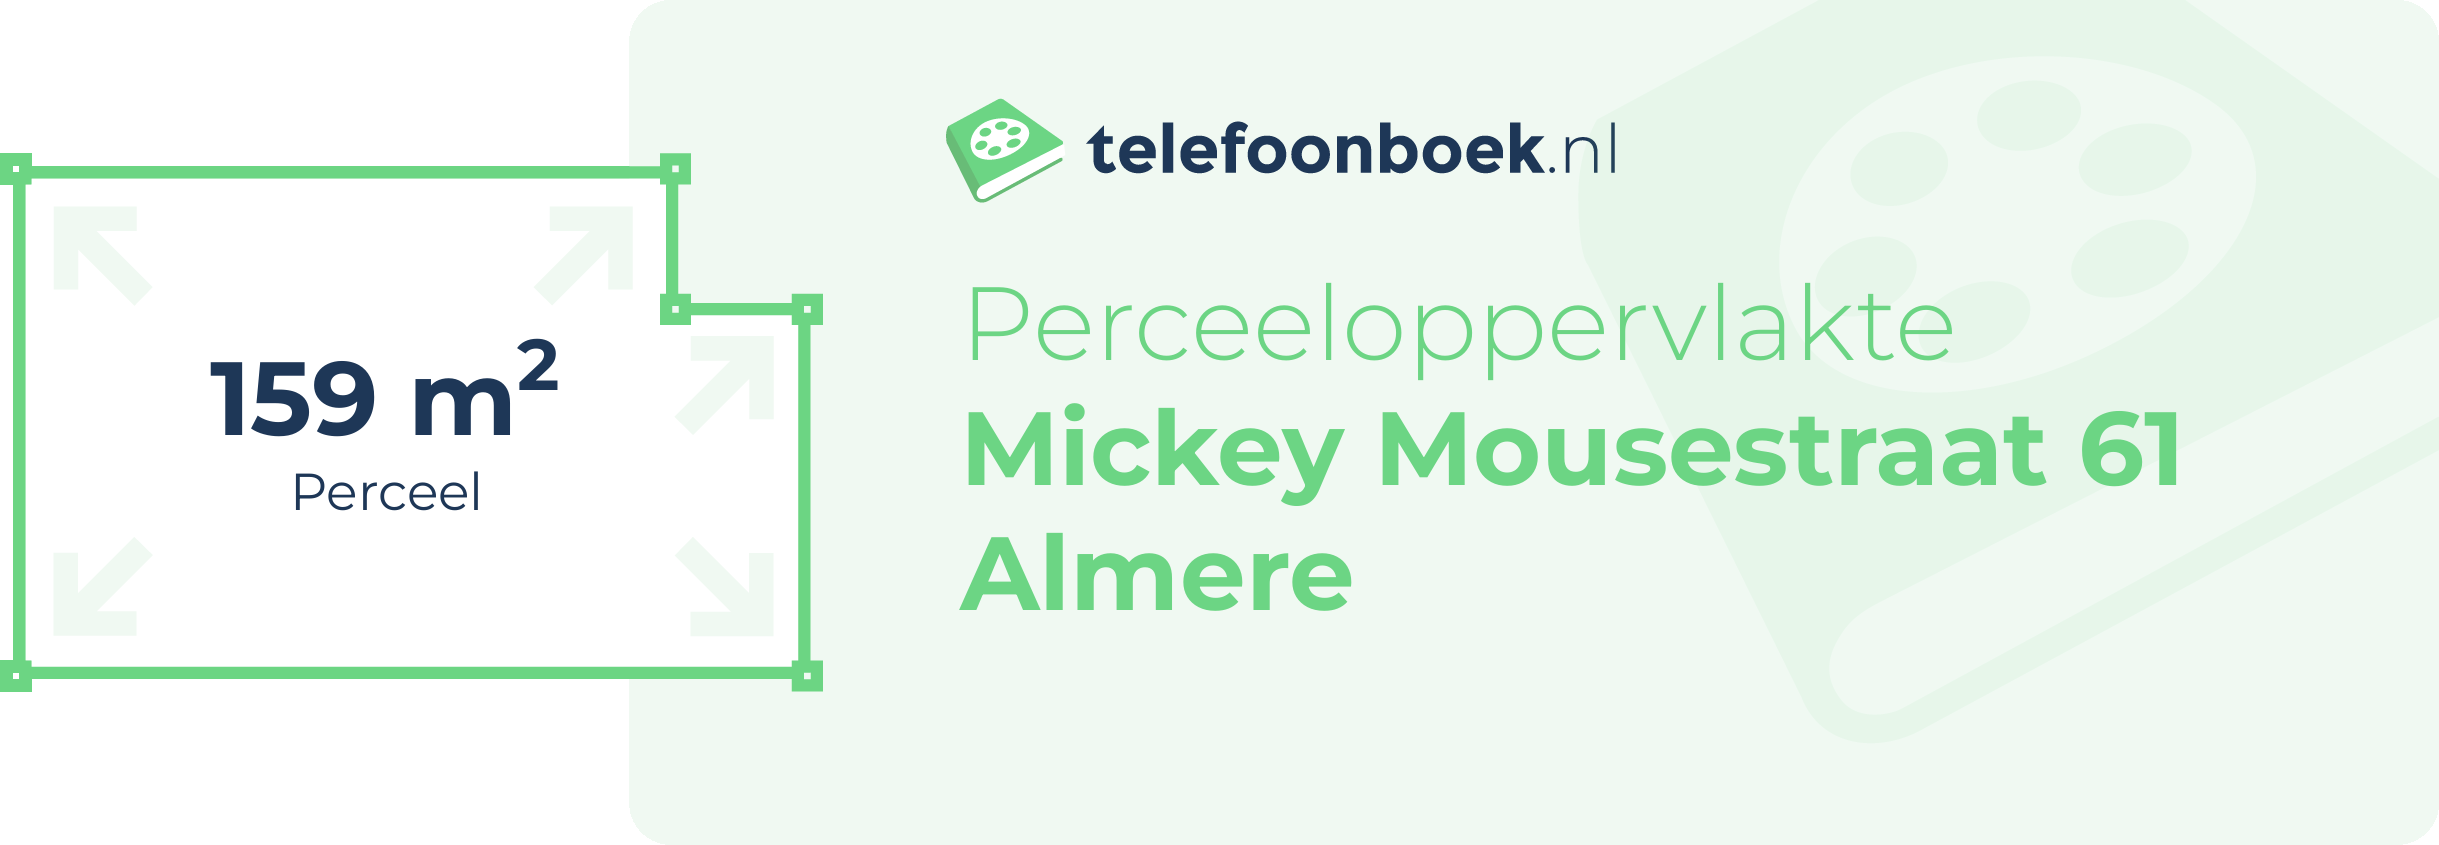 Perceeloppervlakte Mickey Mousestraat 61 Almere